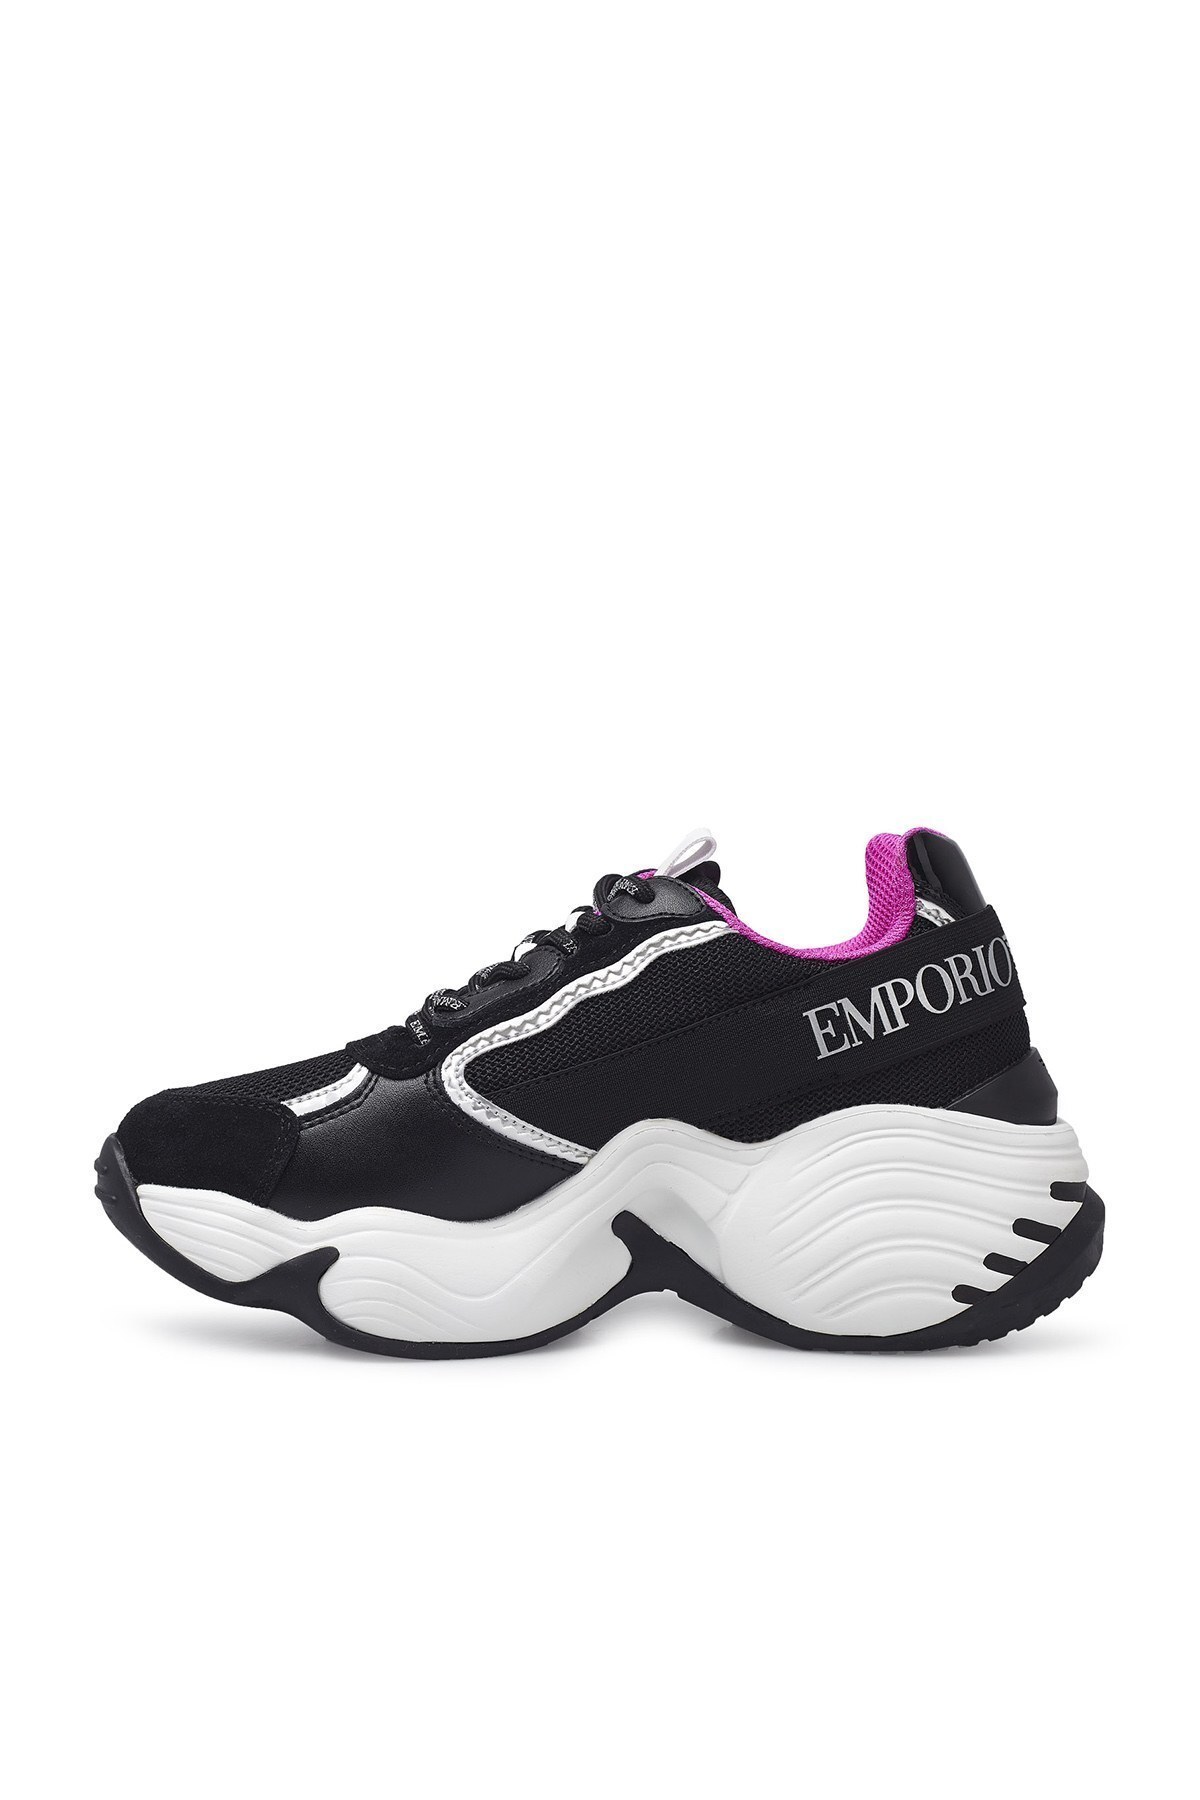 Emporio Armani Sneaker Kadın Ayakkabı X3X088 XM059 N102 SİYAH